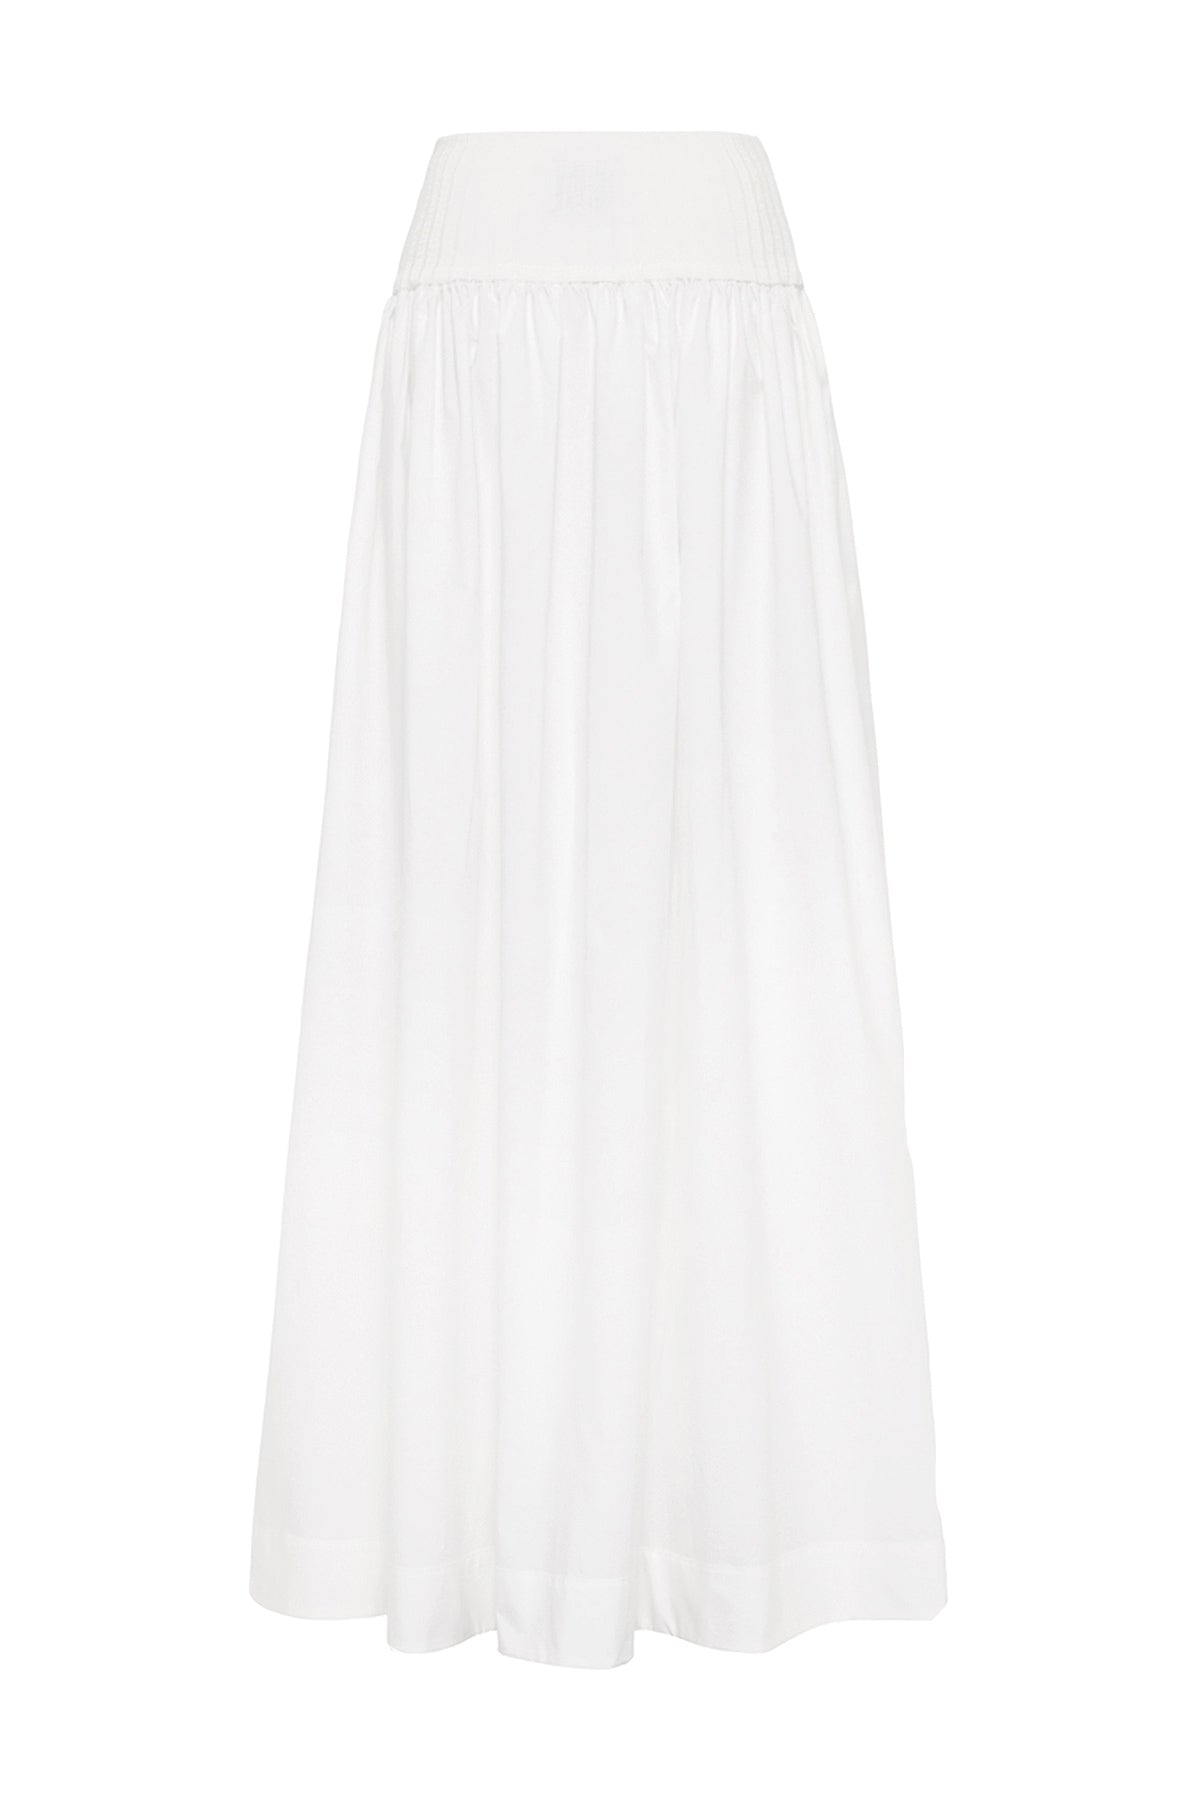 Cotton Rib Maxi Skirt in Ivory - shop-olivia.com